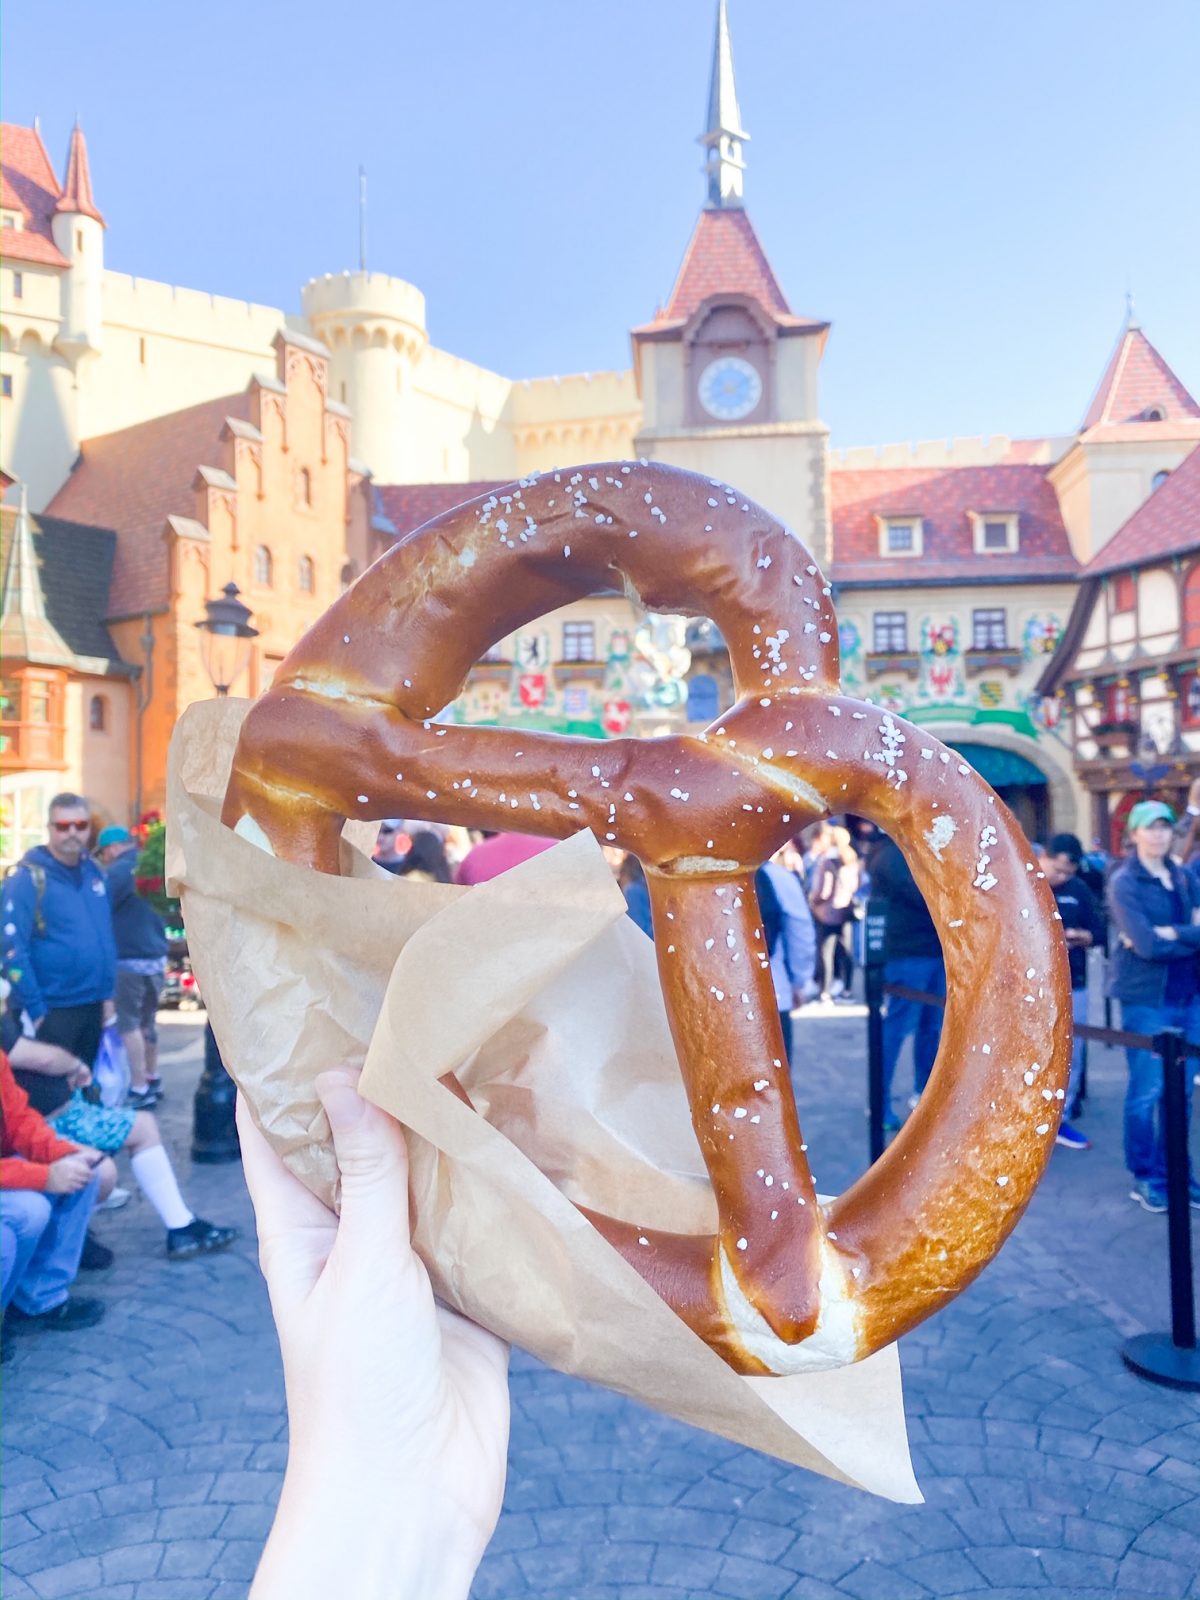 hand holding Giant pretzel in front of German buildings 